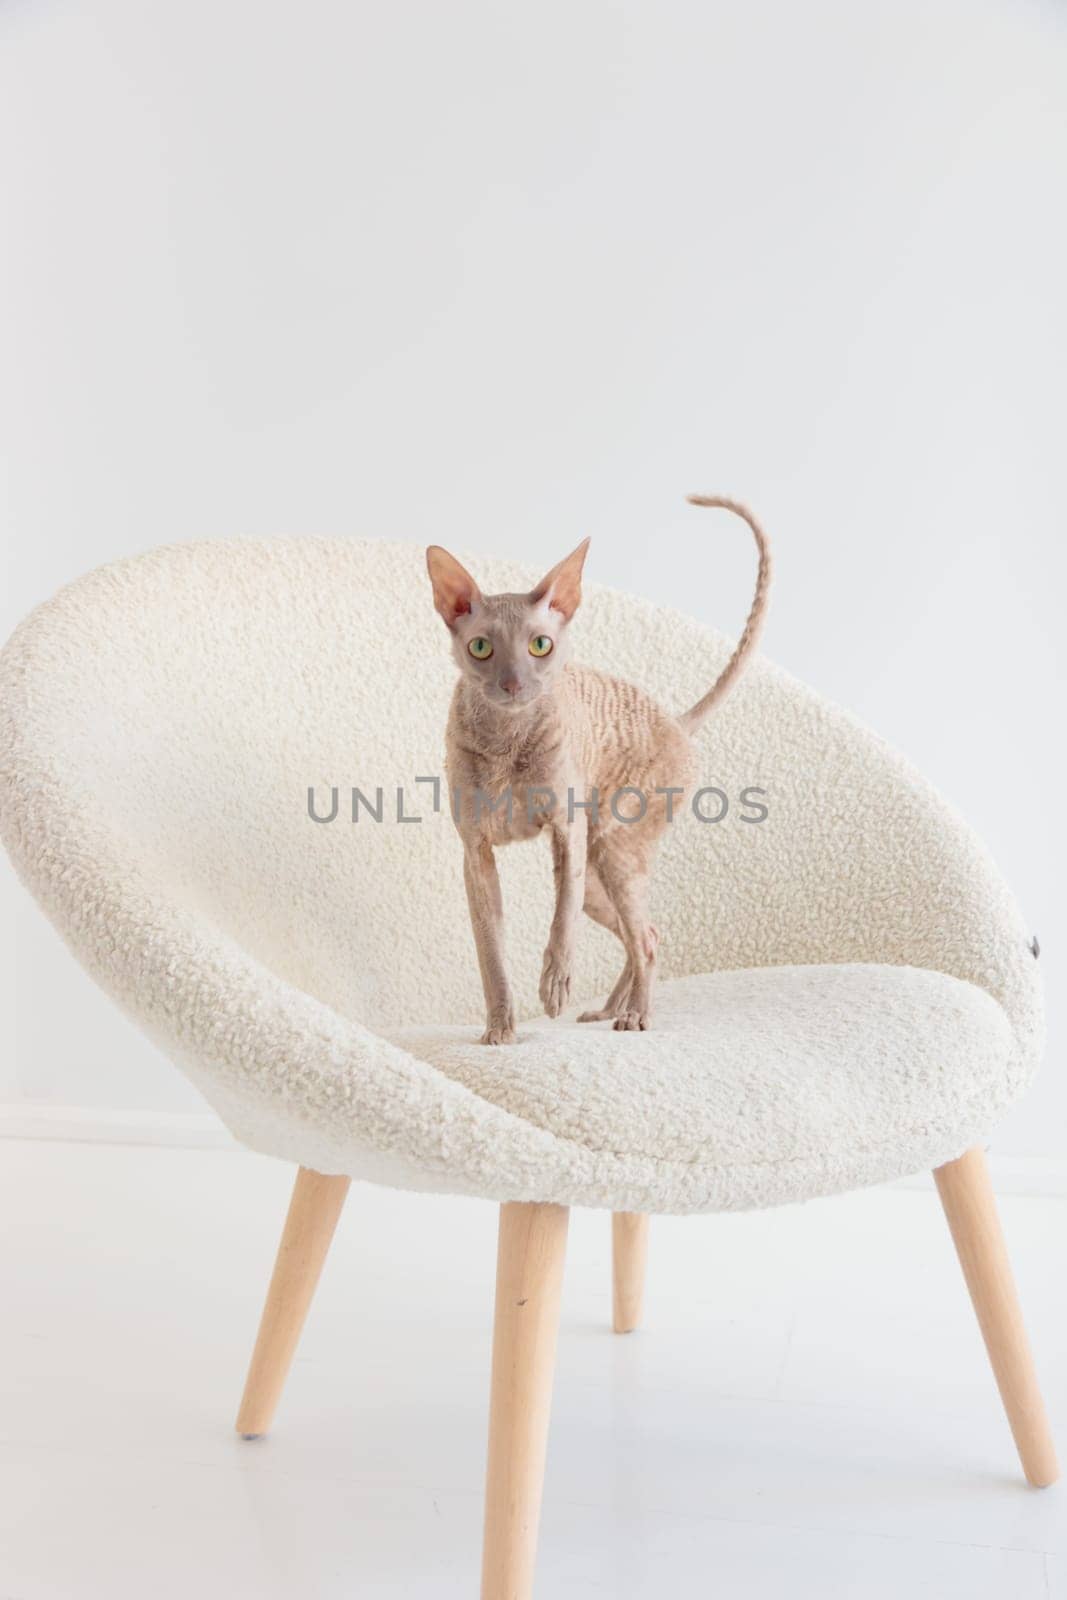 Cute cornish rex cat sitting in the cream chair on white background by Gudzar